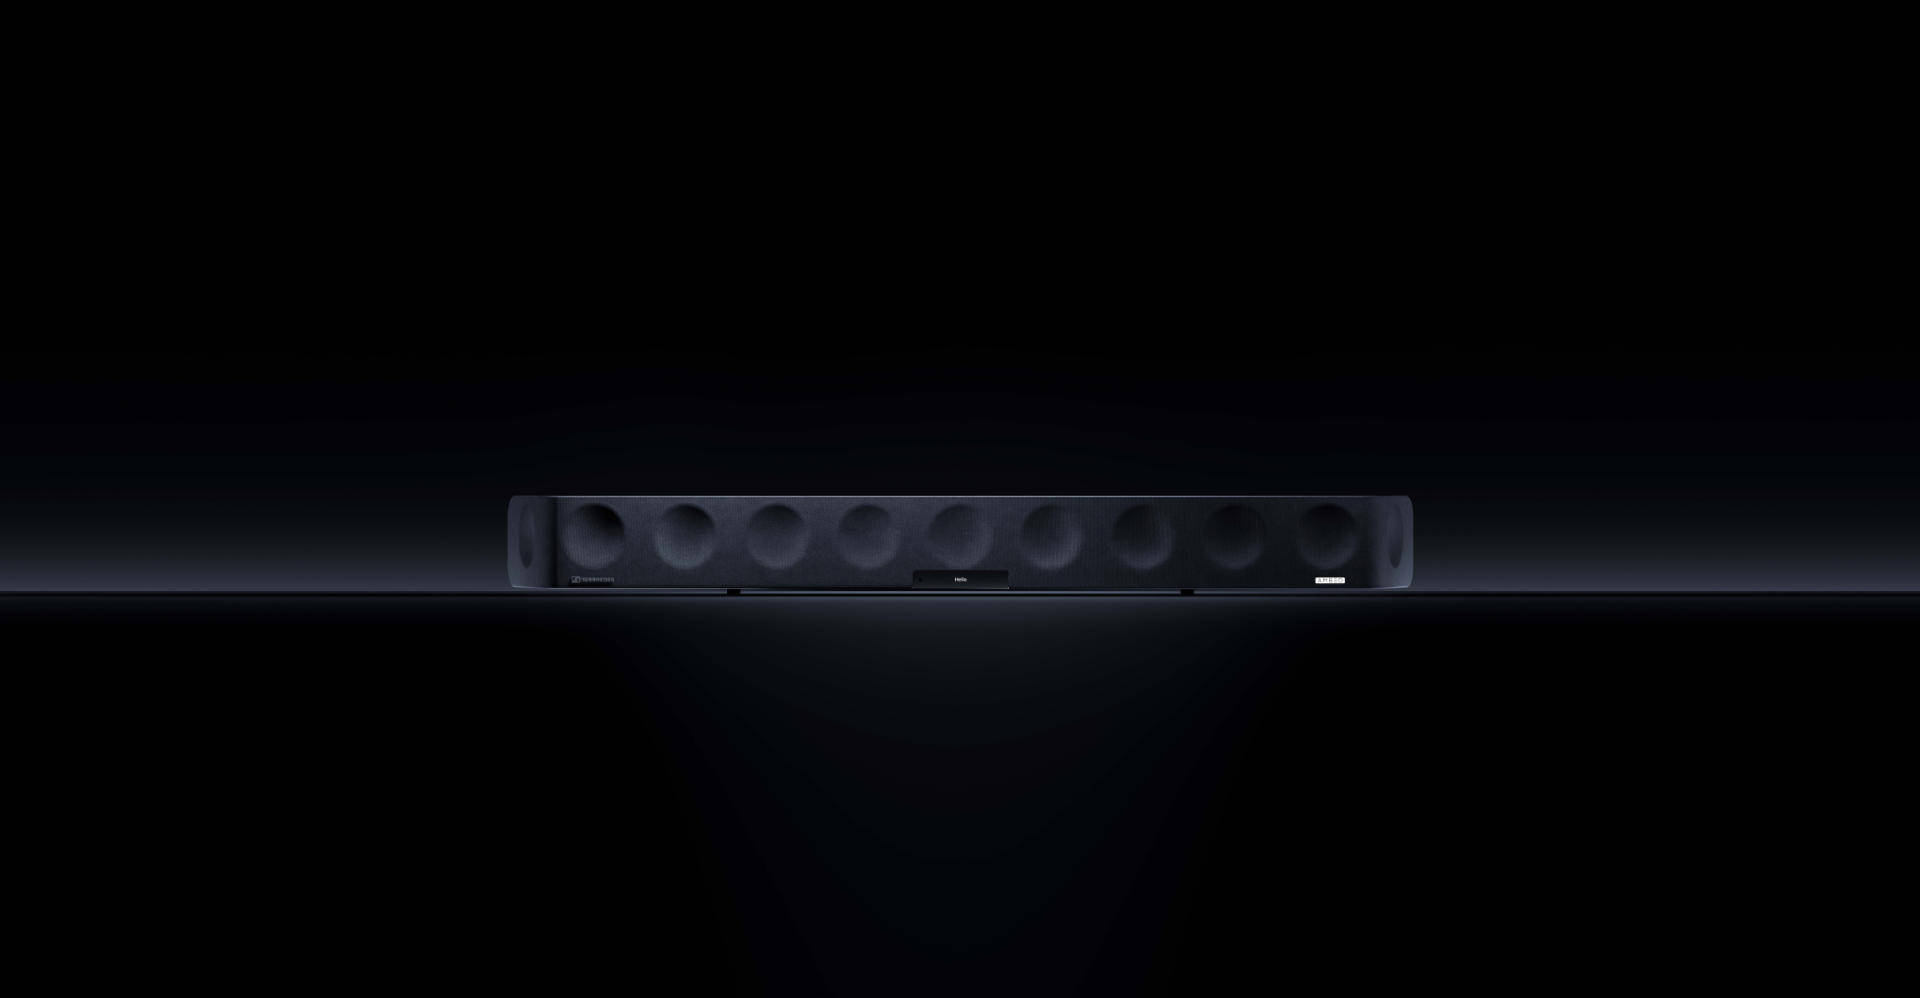 Ambeo|Ambeo soundbar 也支持Sony 360°实景音效了